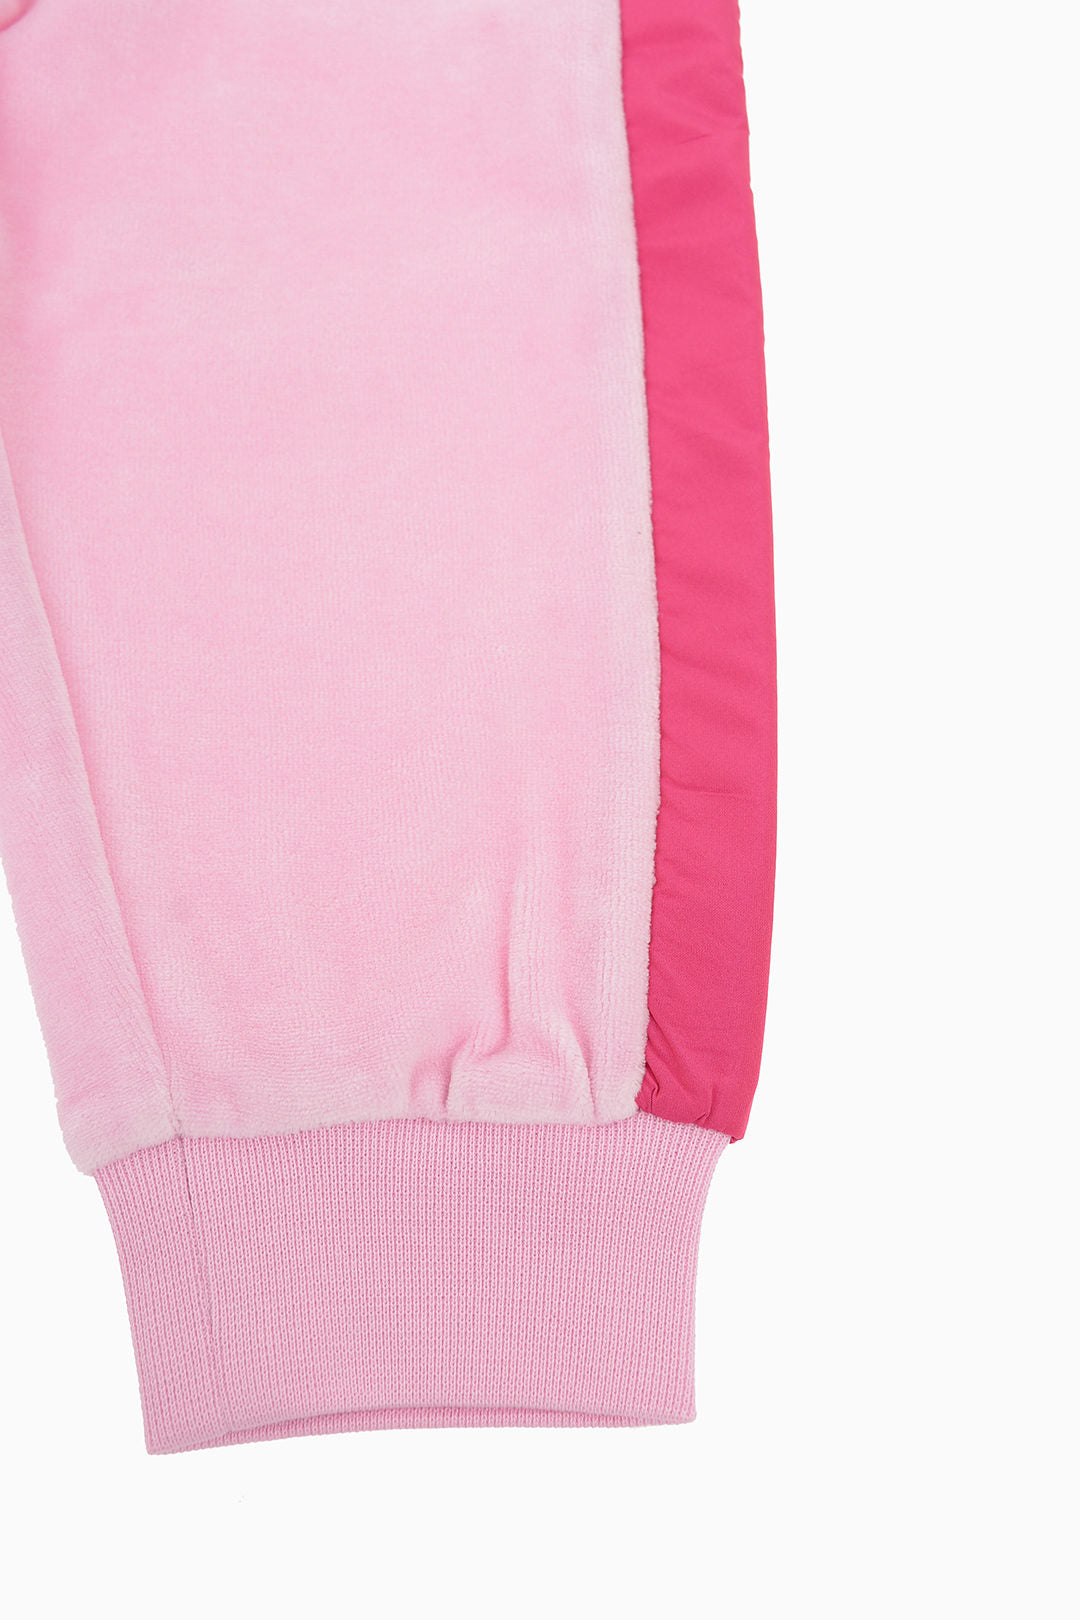 Sweatshirt and Panst Set Pink